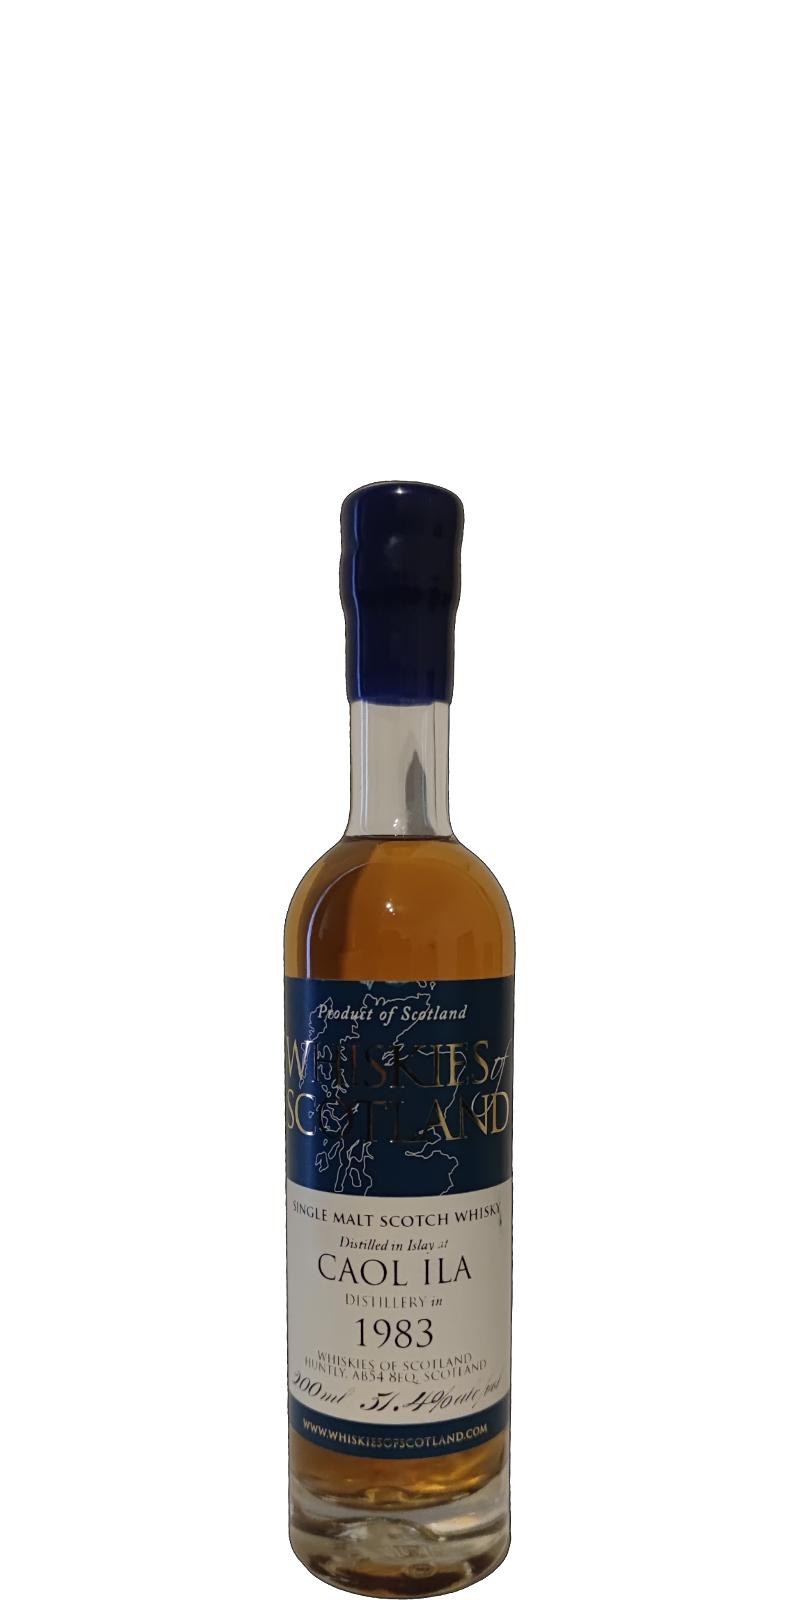 Caol Ila 1983 SMD Whiskies of Scotland 51.4% 200ml